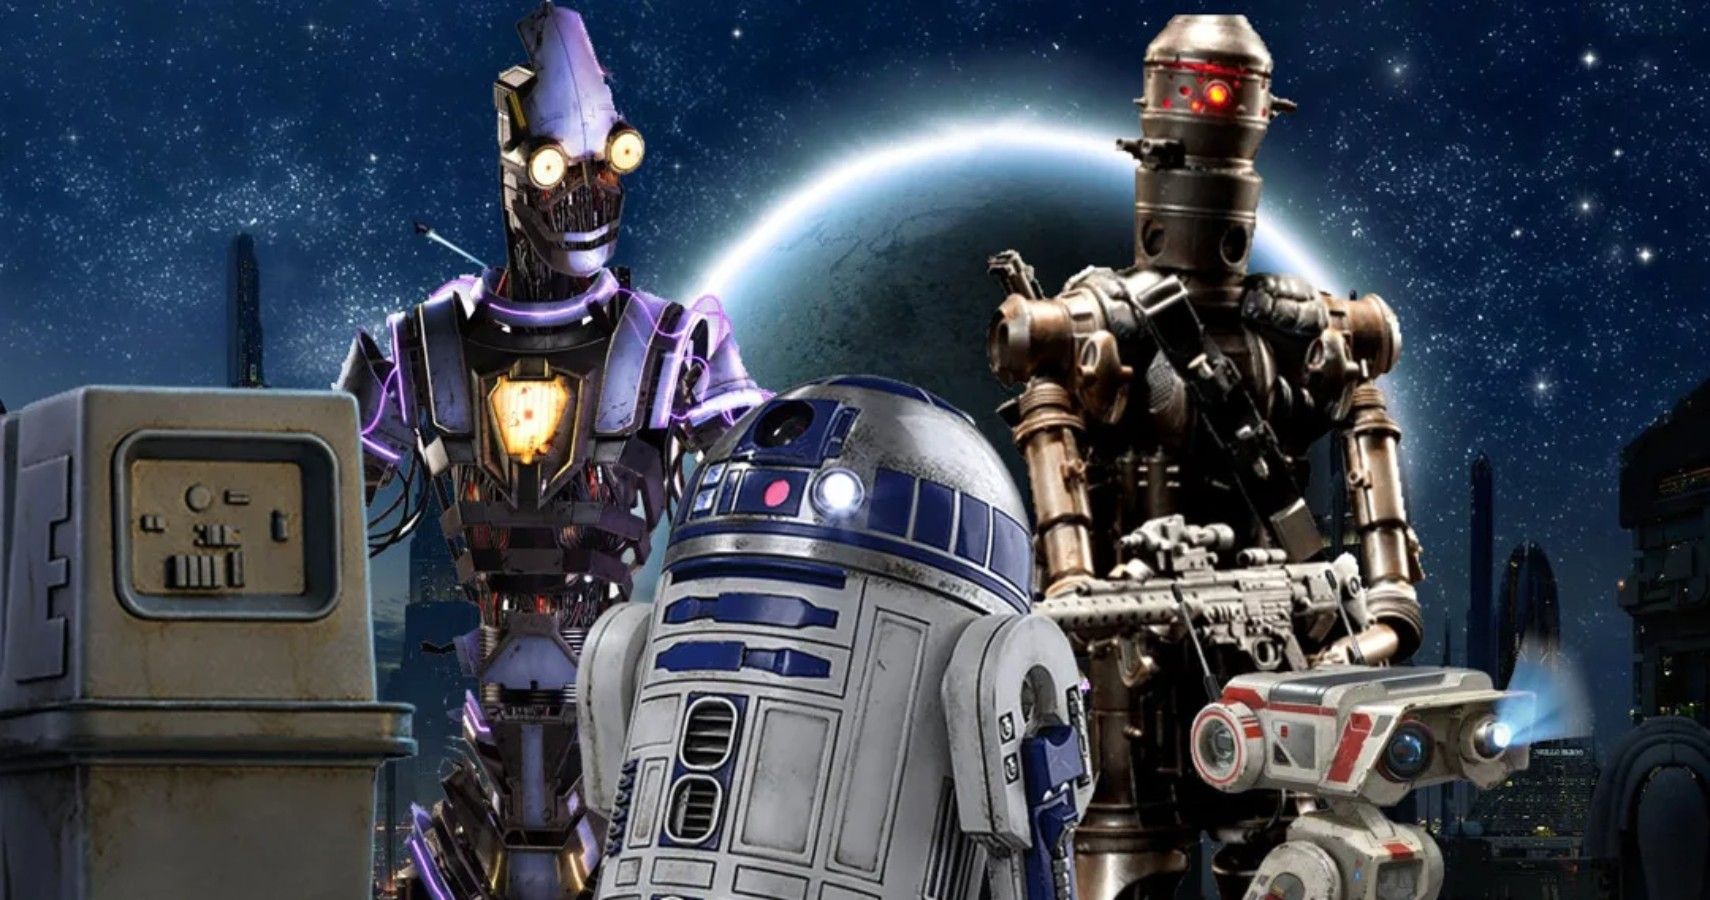 Disney Star Wars The Force Awakens BB-8 Astro Droid